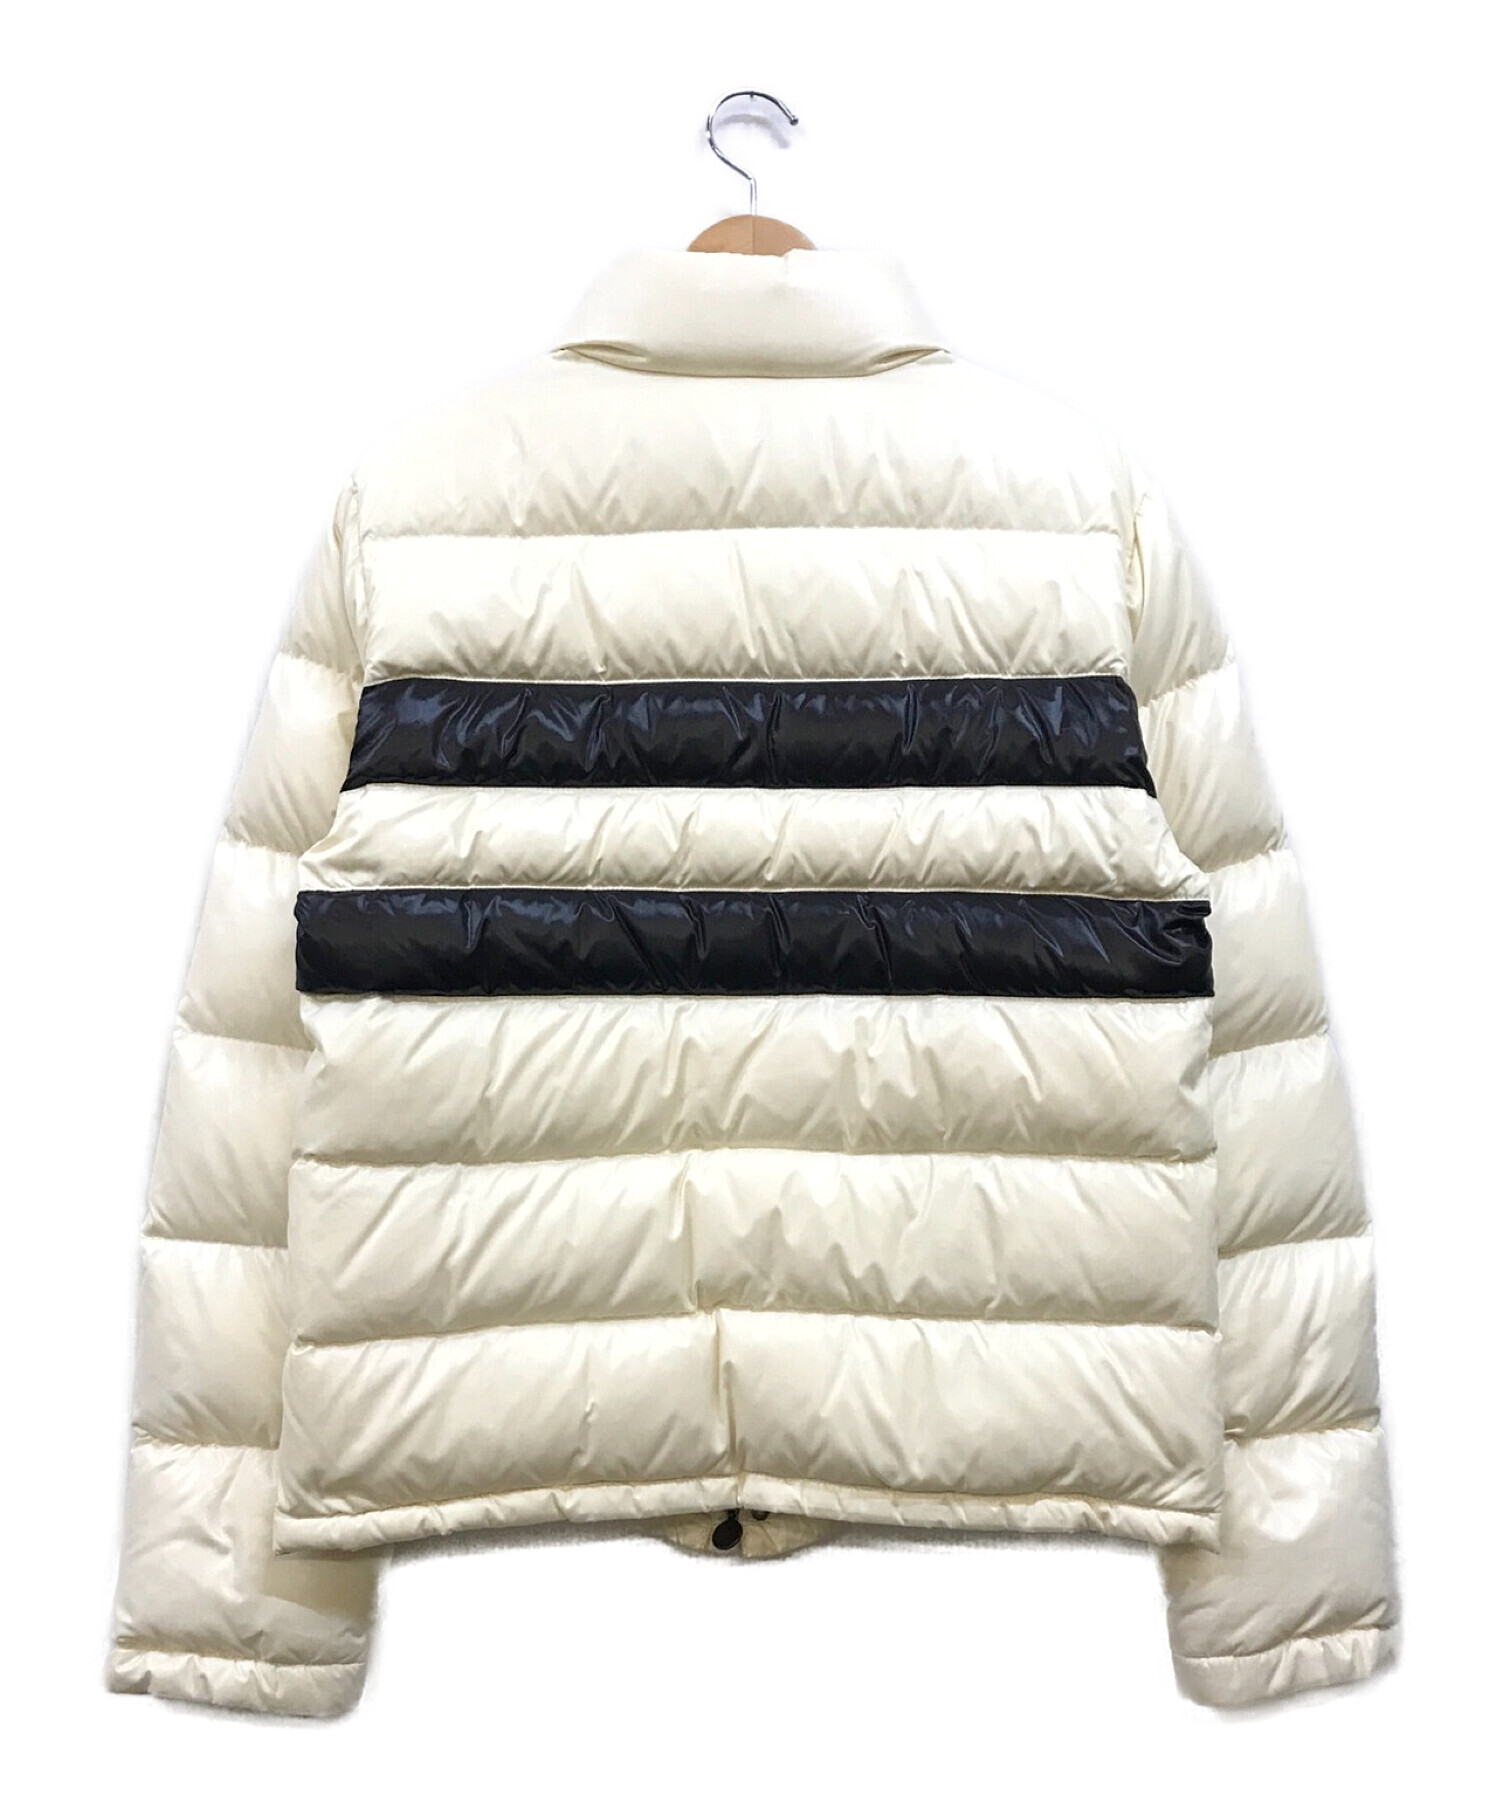 Moncler ダウンジャケット オフホワイト サイズ1袖丈62cm